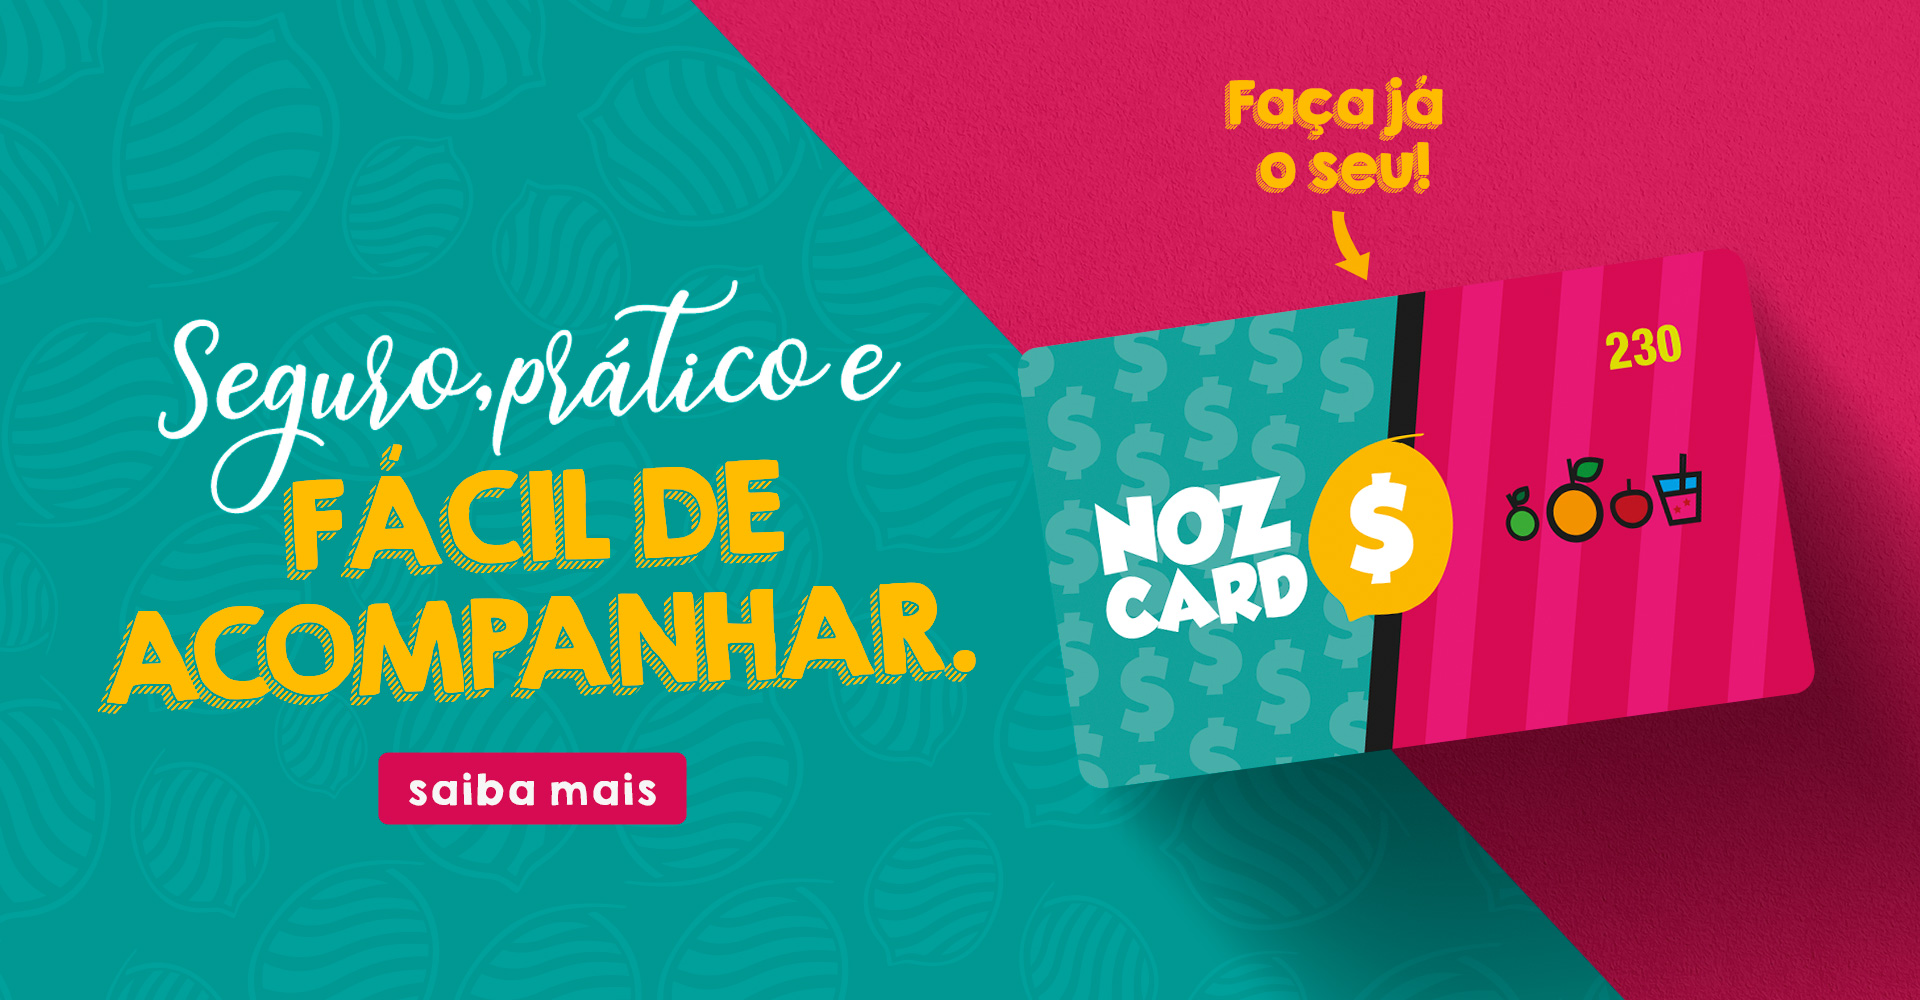 Noz Card